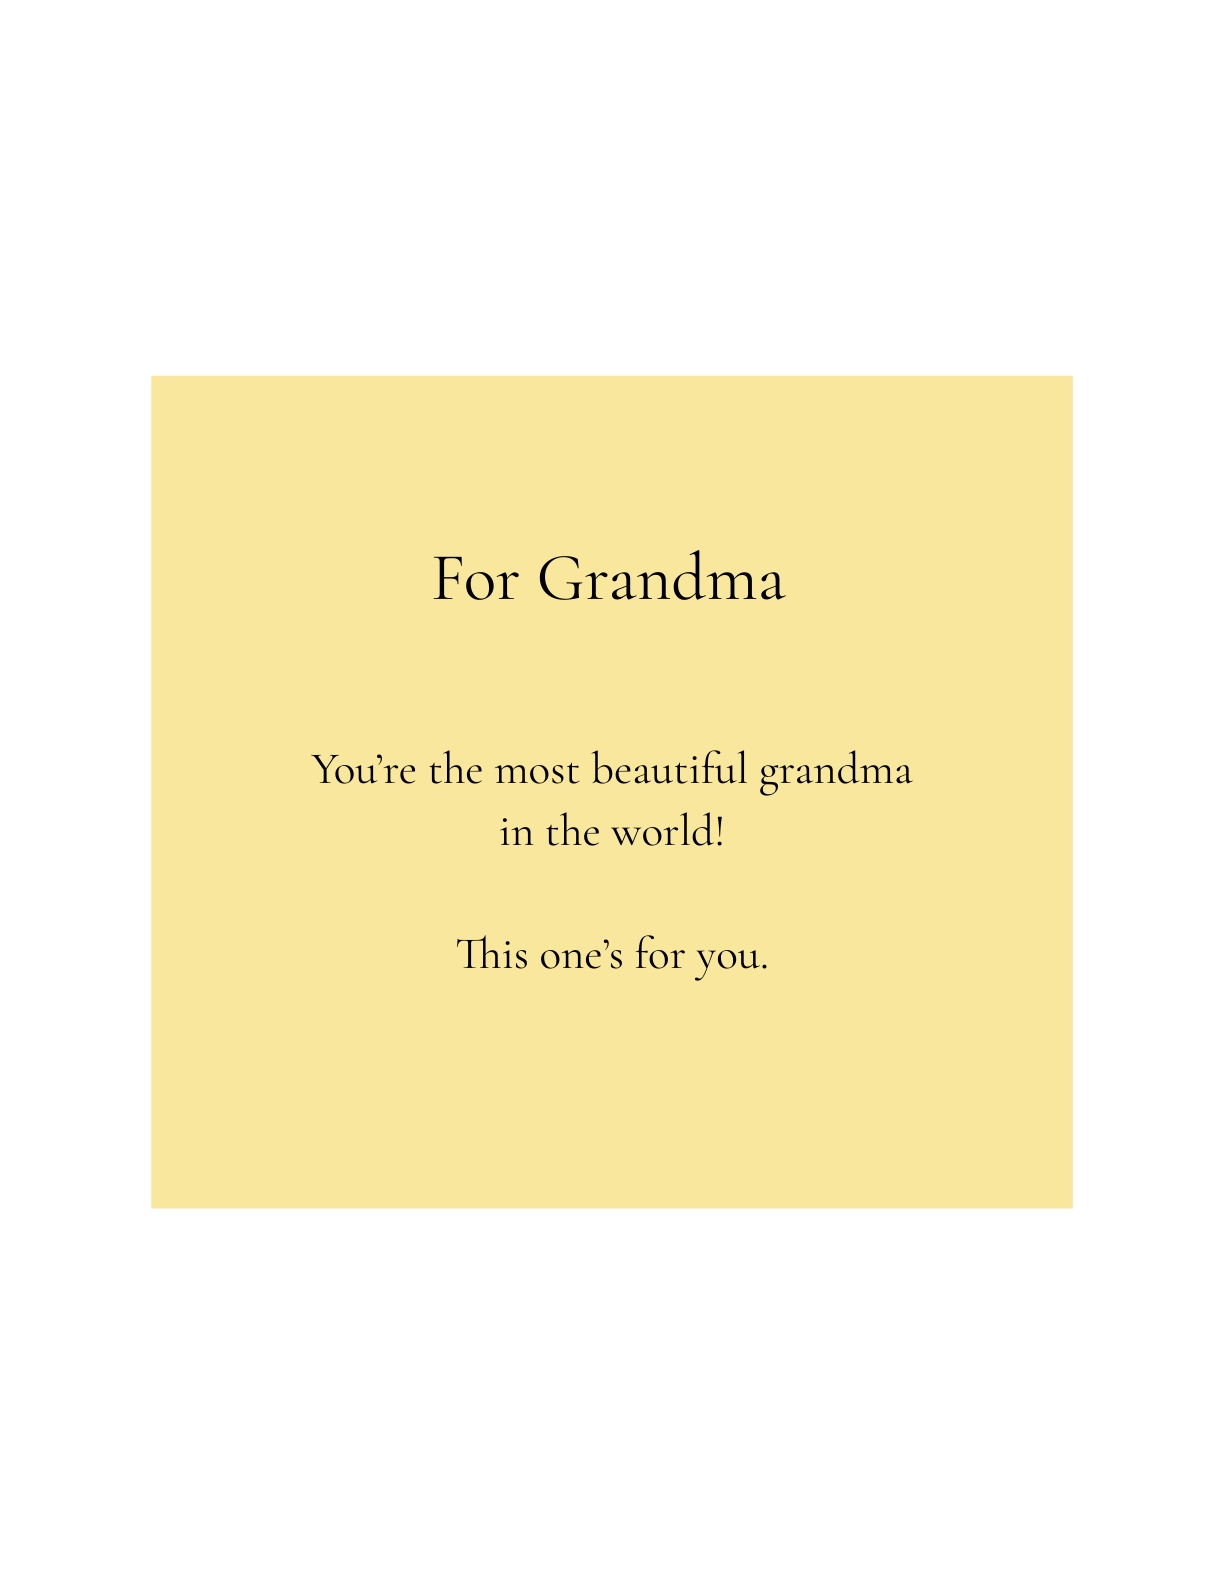 Grandma's Brag Photo Book Template